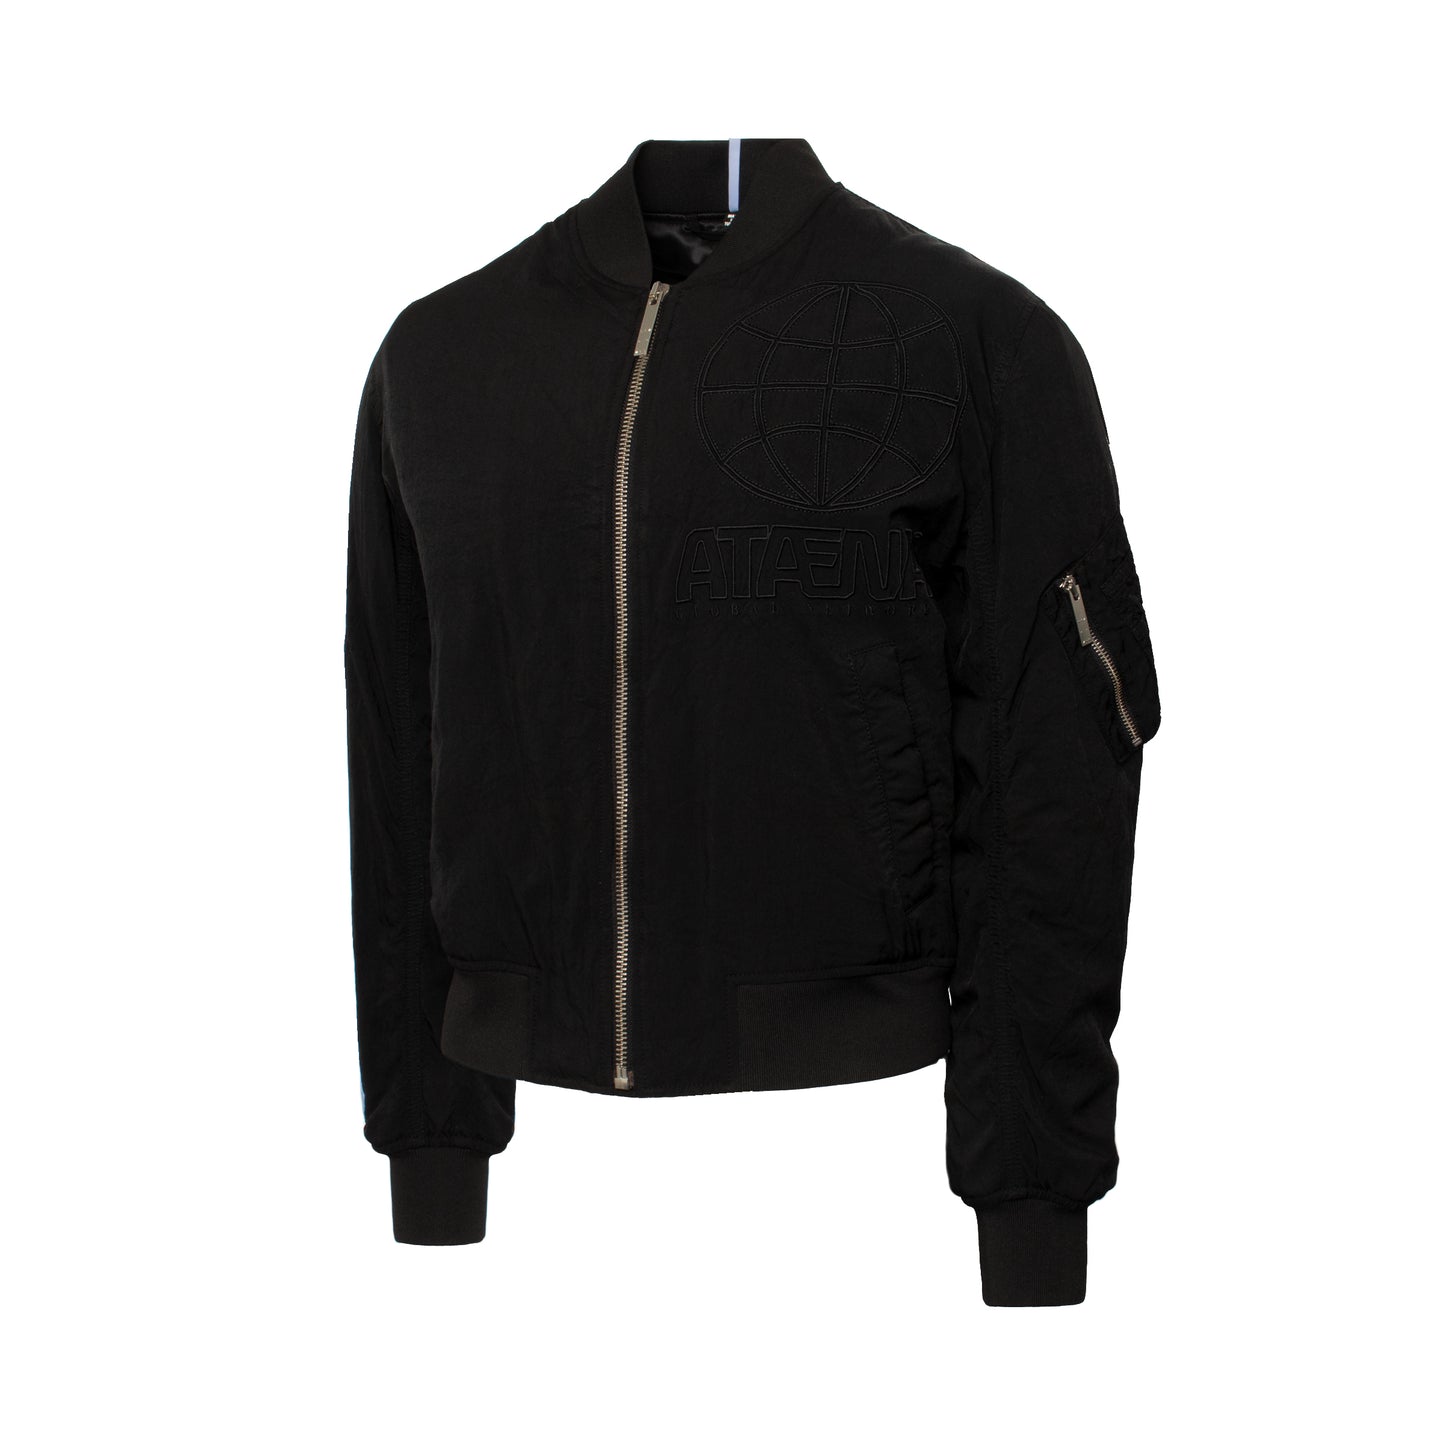 McQ Dye Nylon Jacket in Black